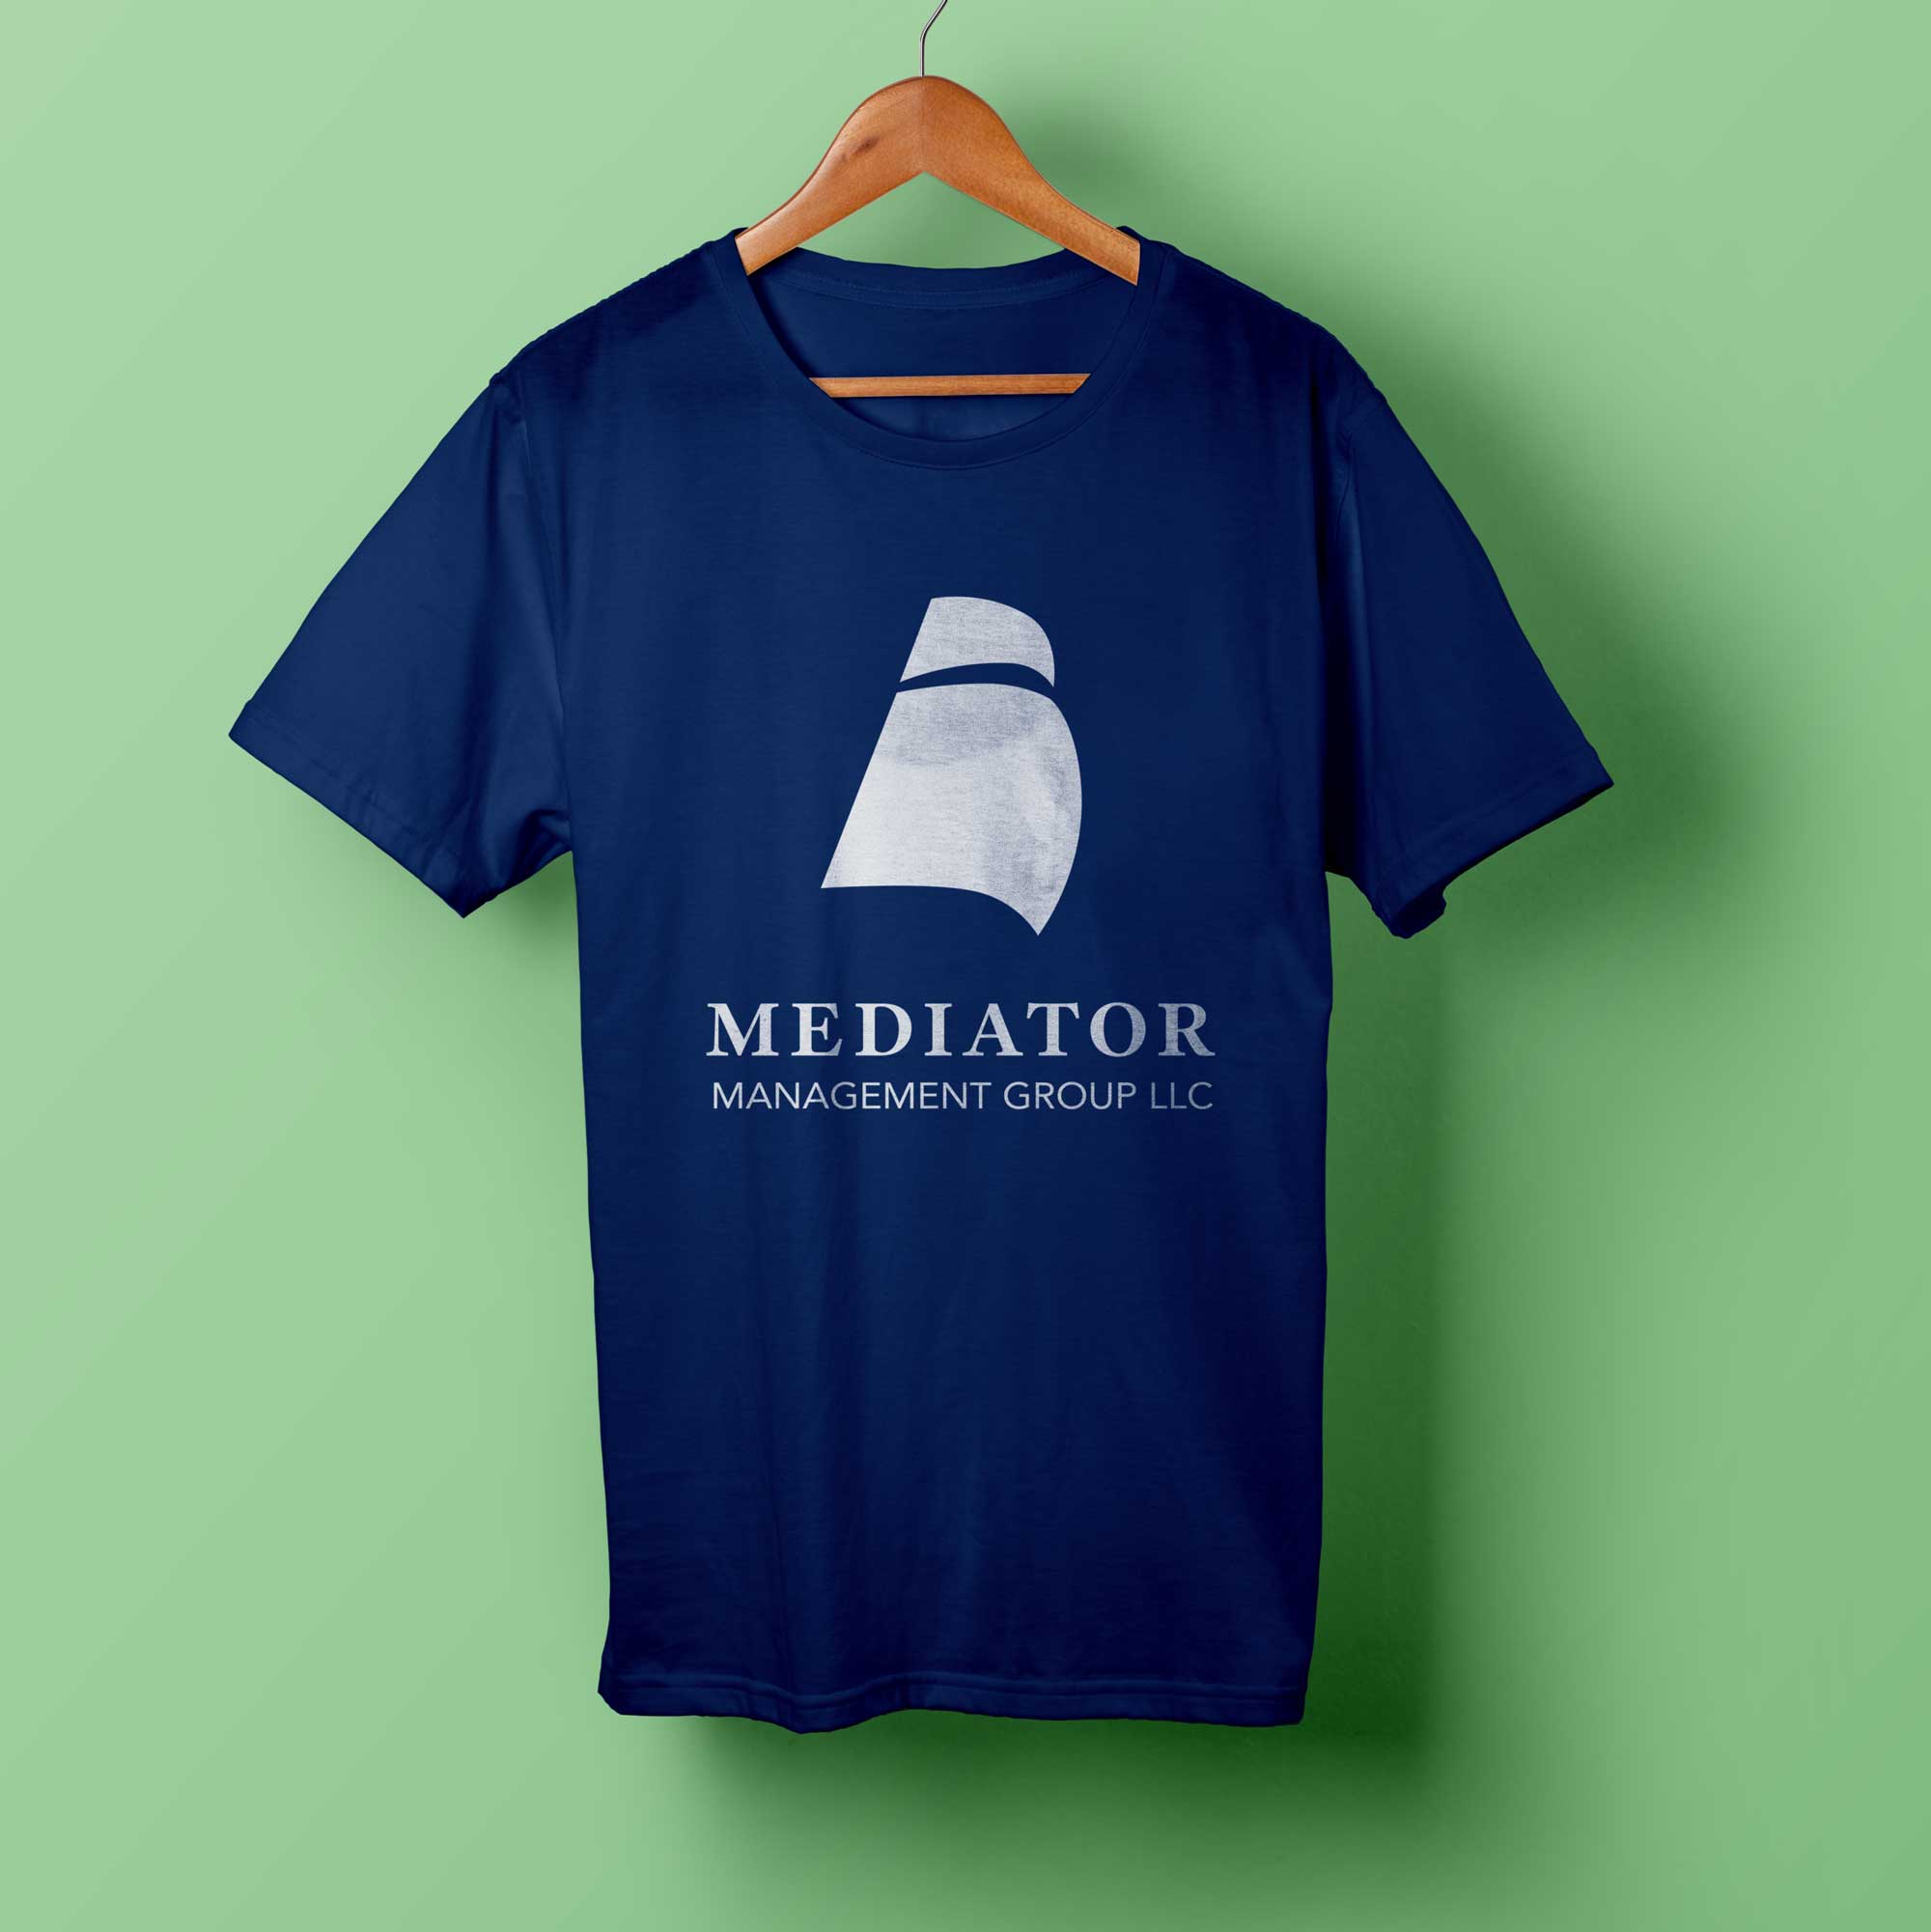 Mockup tshirt with Mediator logo on it